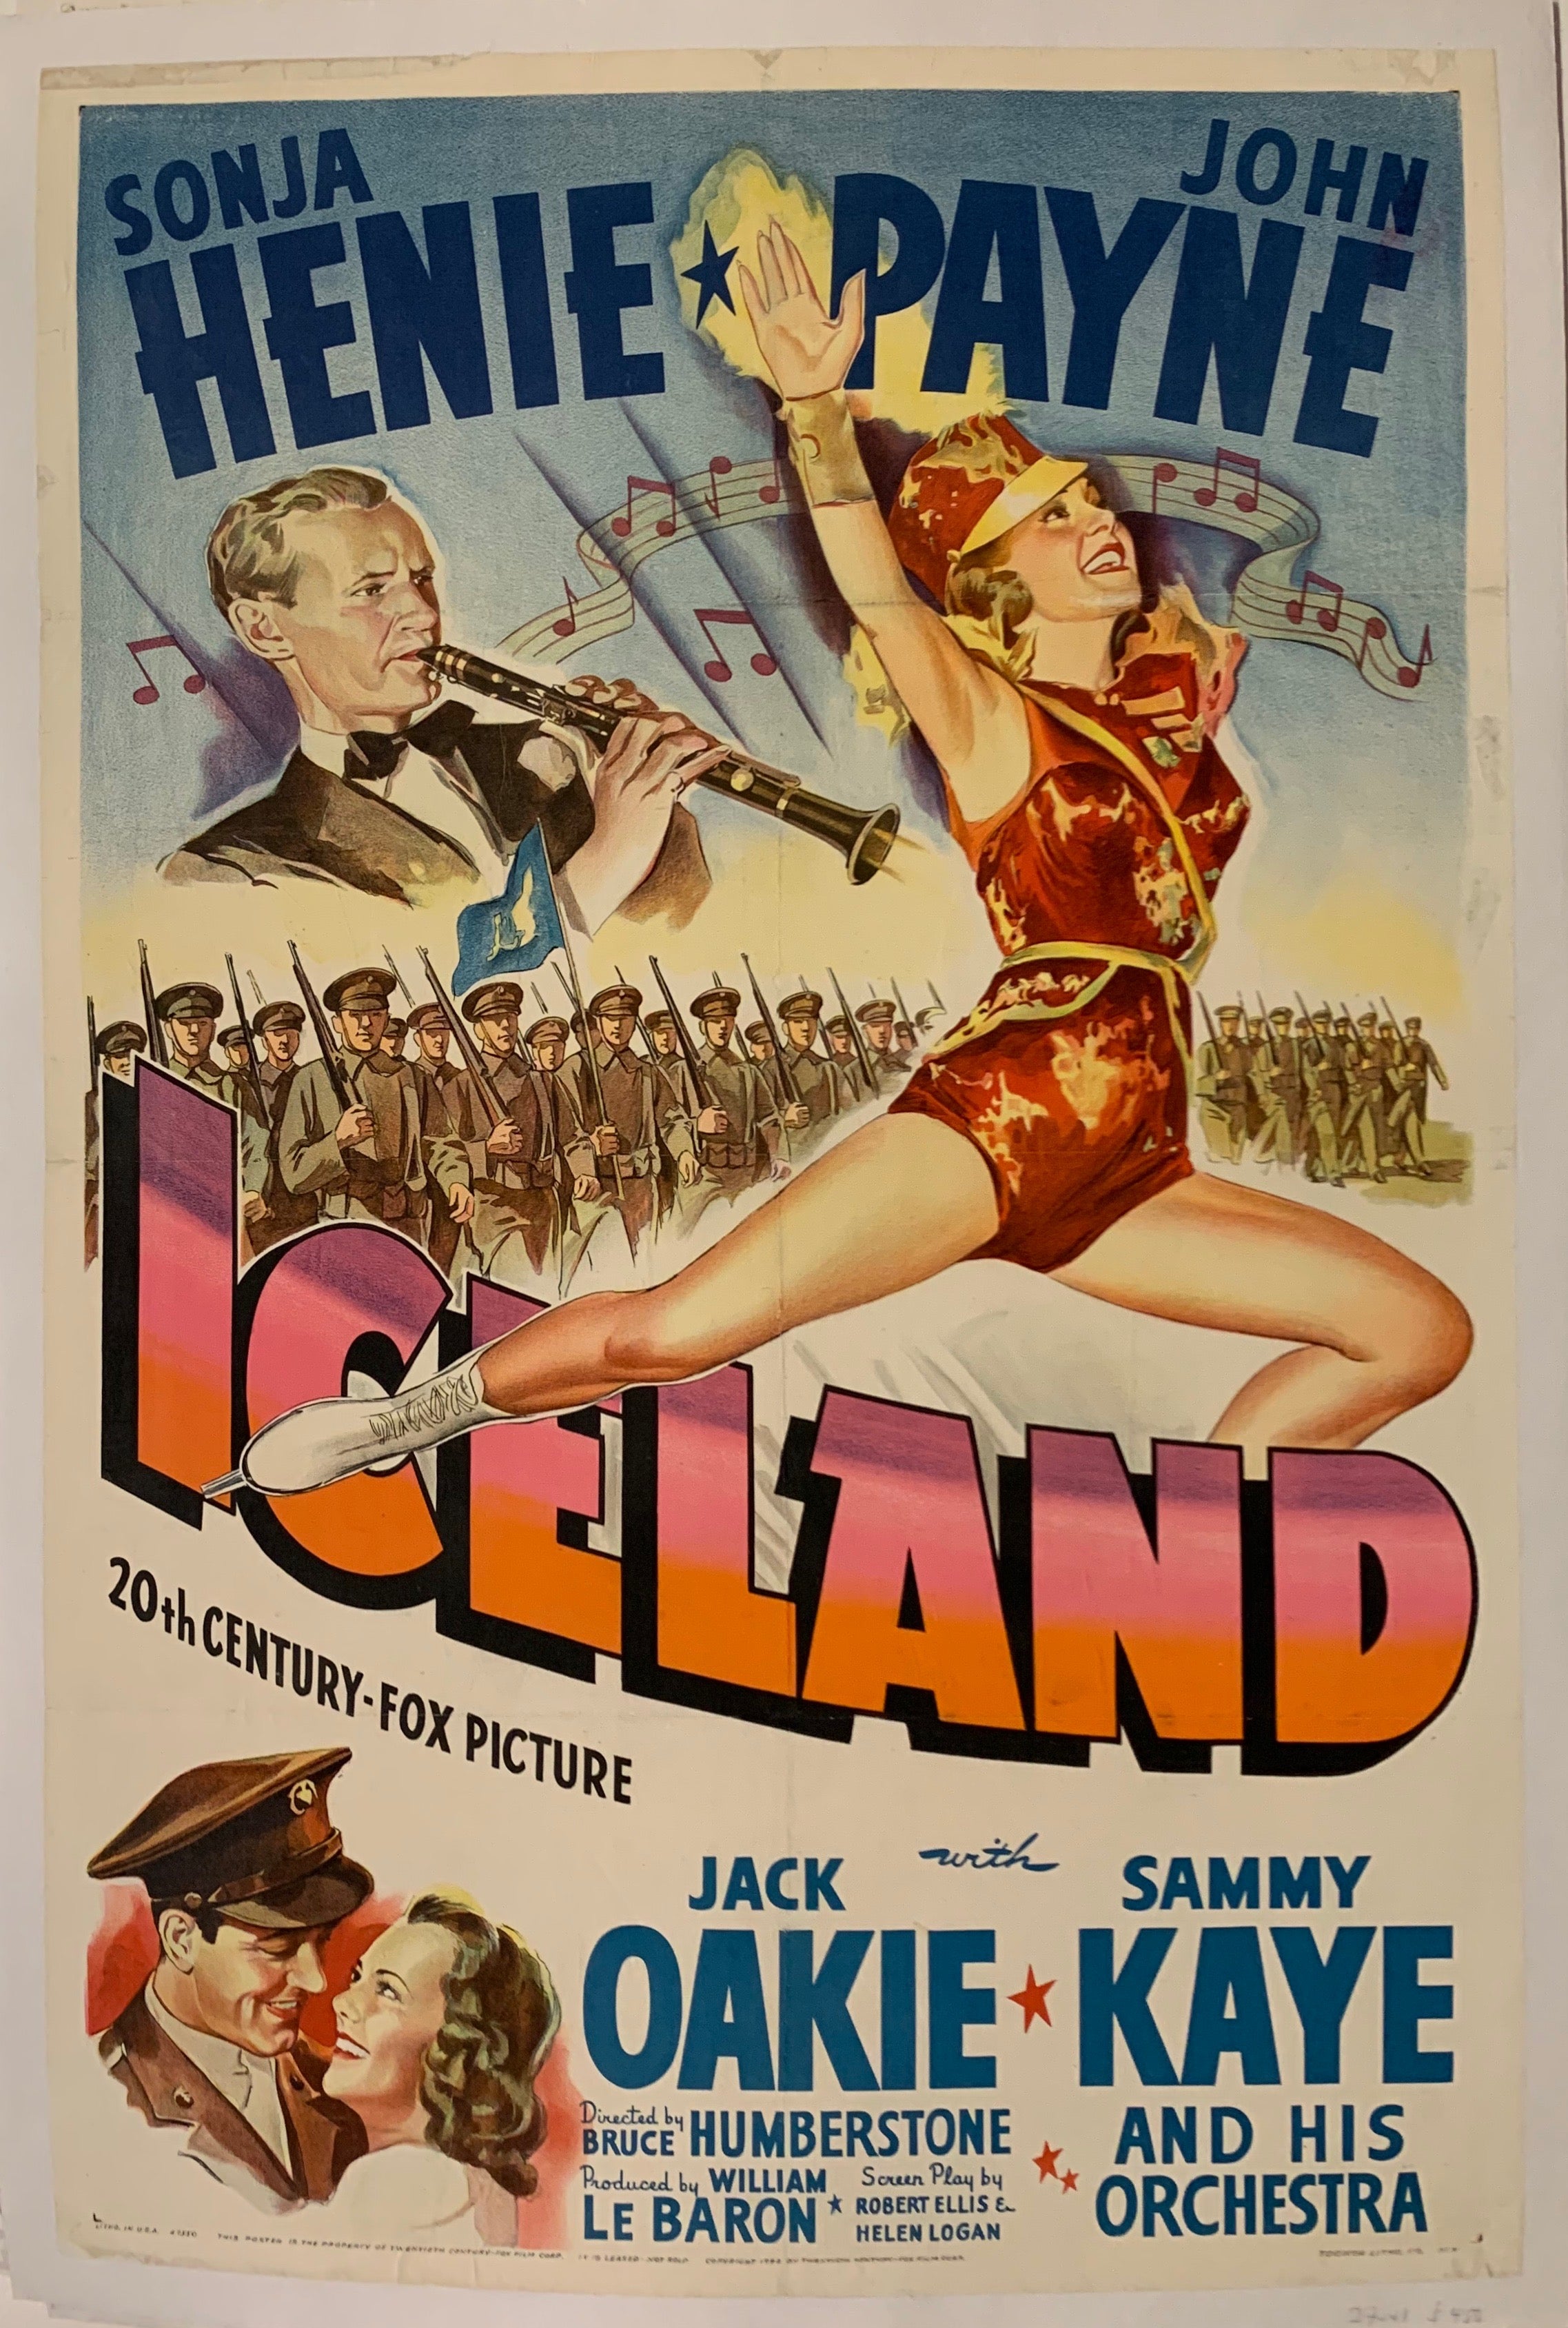 Iceland Film Poster